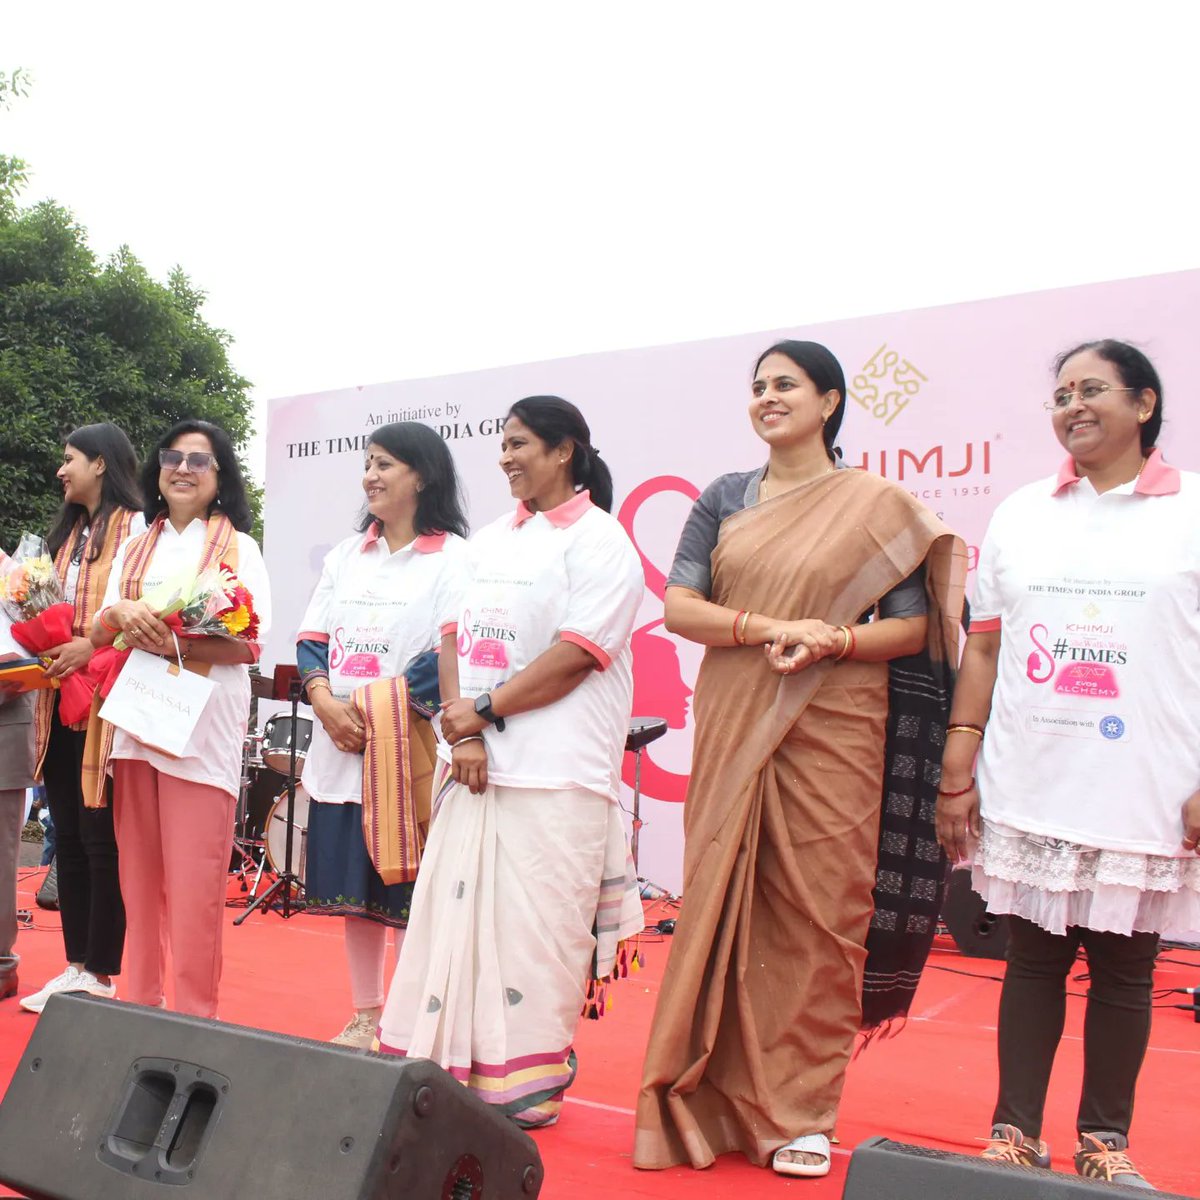 Celebrating international women's day with #timesofindia #Bhubaneswar #happyinternationalwomensday